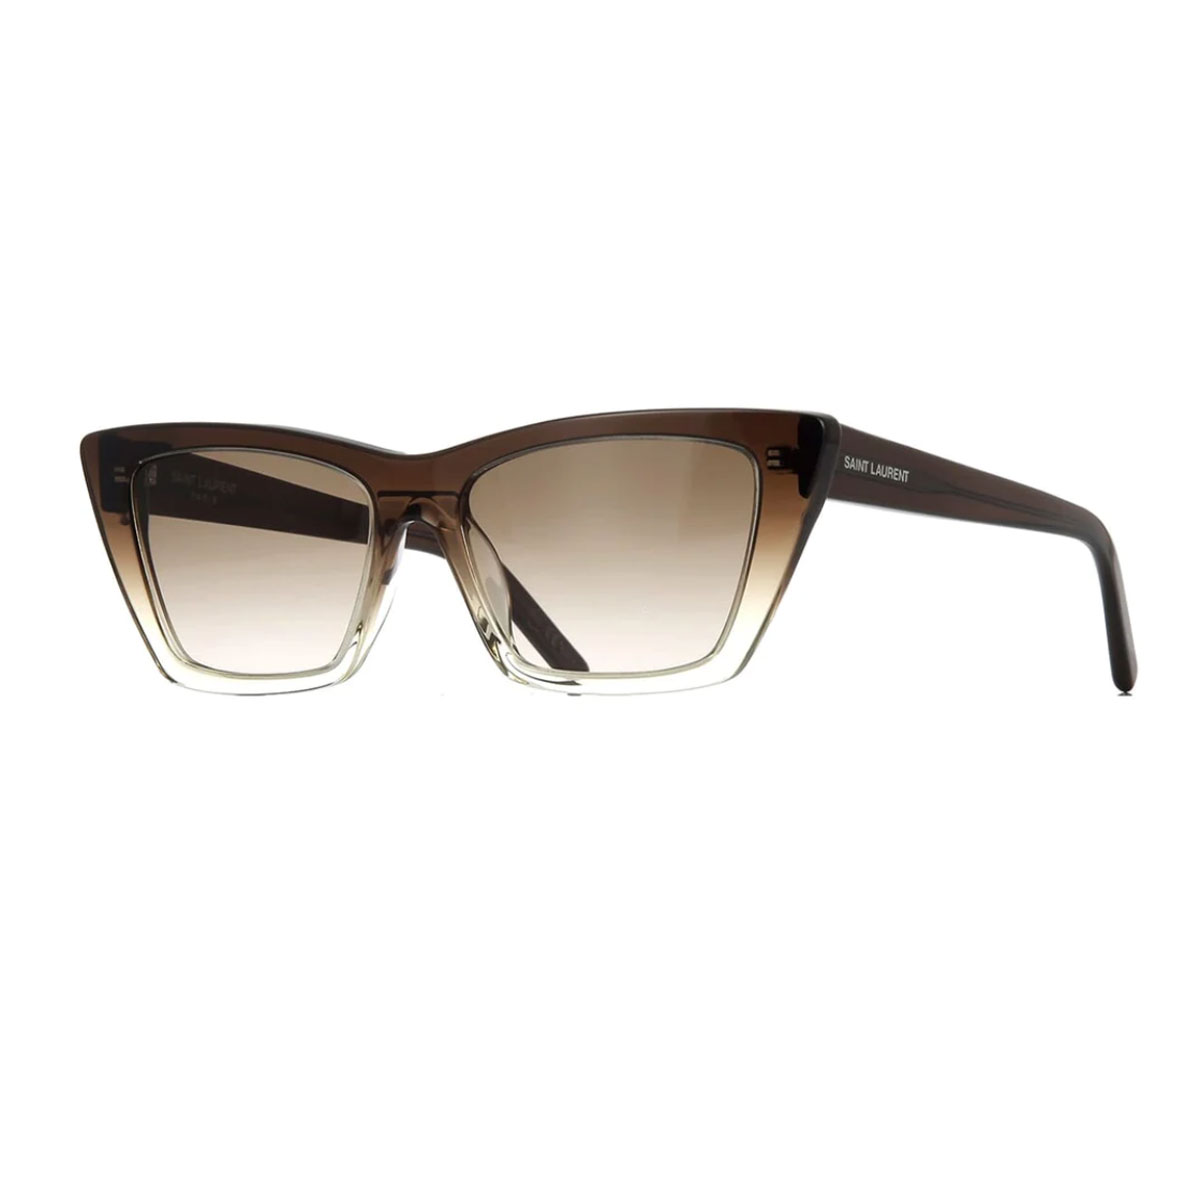 Saint Laurent SL 276 Mica 53 Grey & Black Shiny Sunglasses